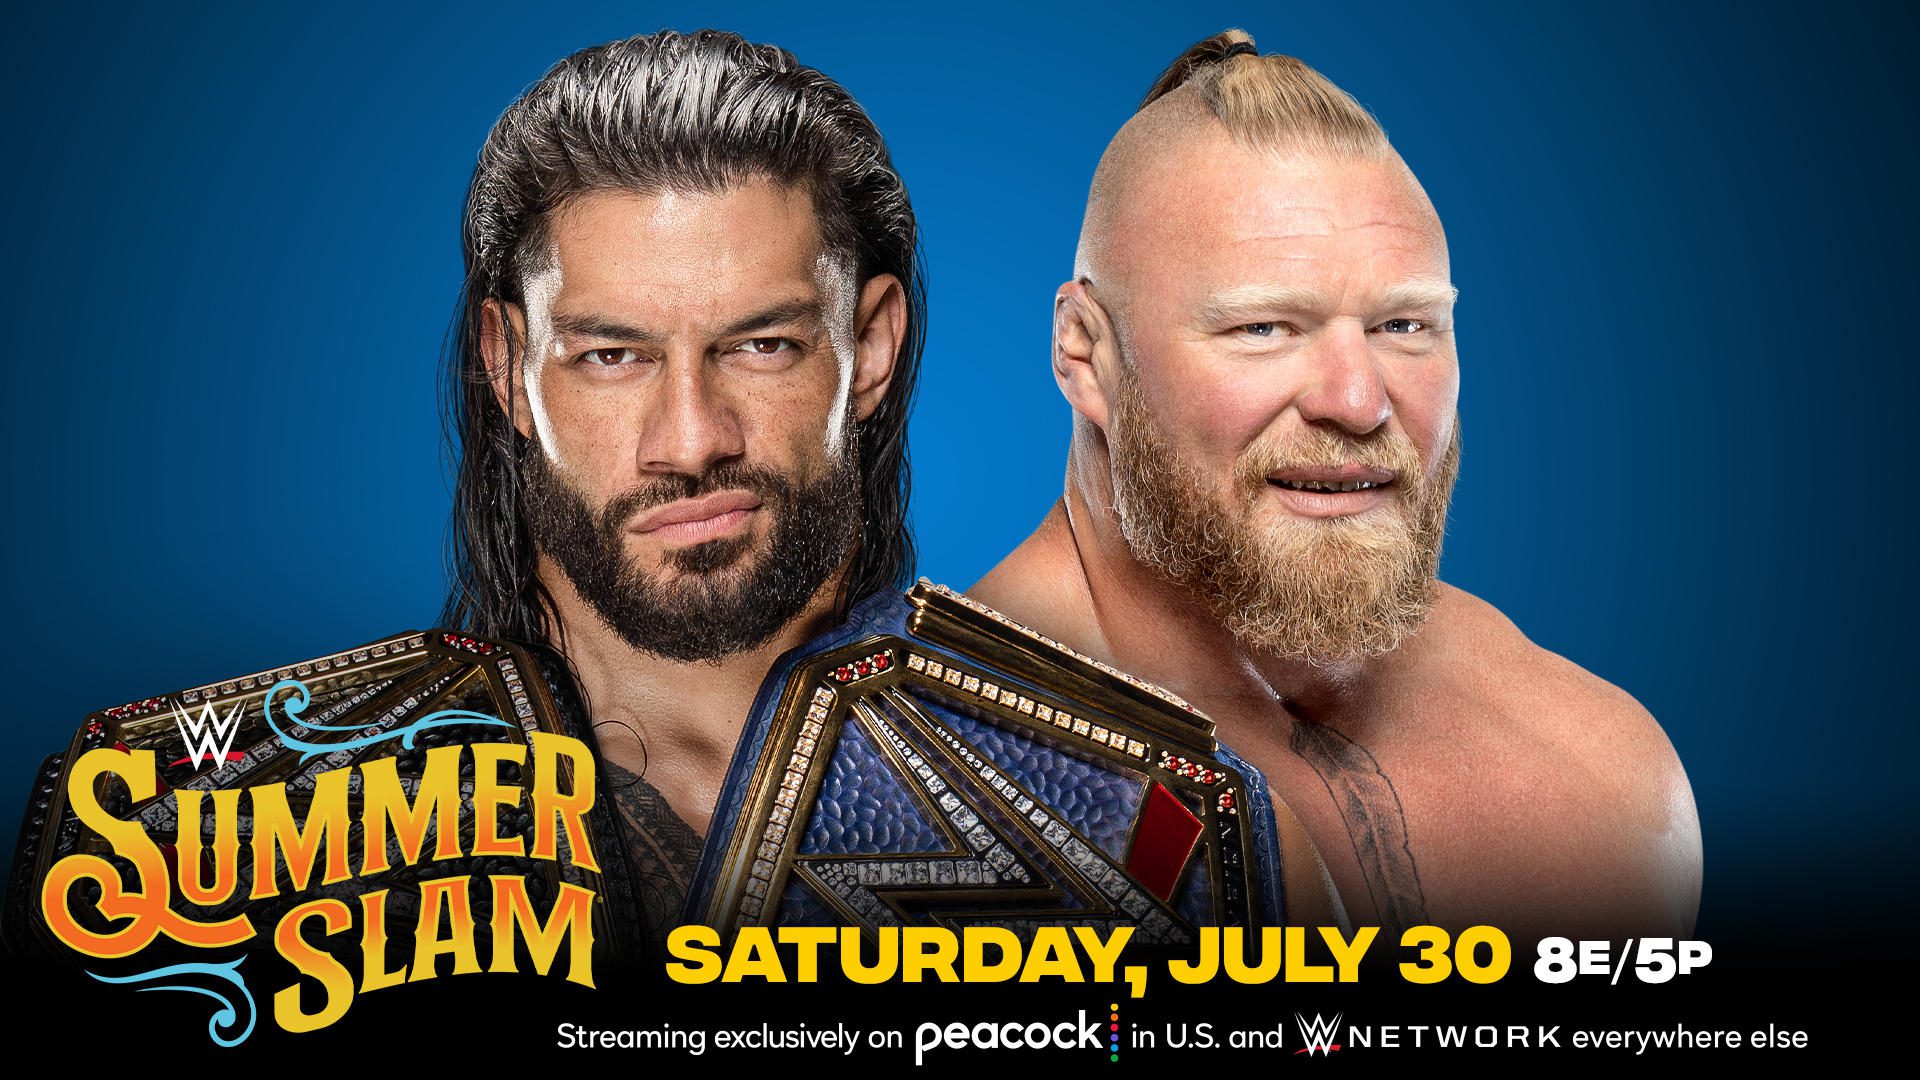 Roamn Reigns vs Brock Lesnar SummerSlam 